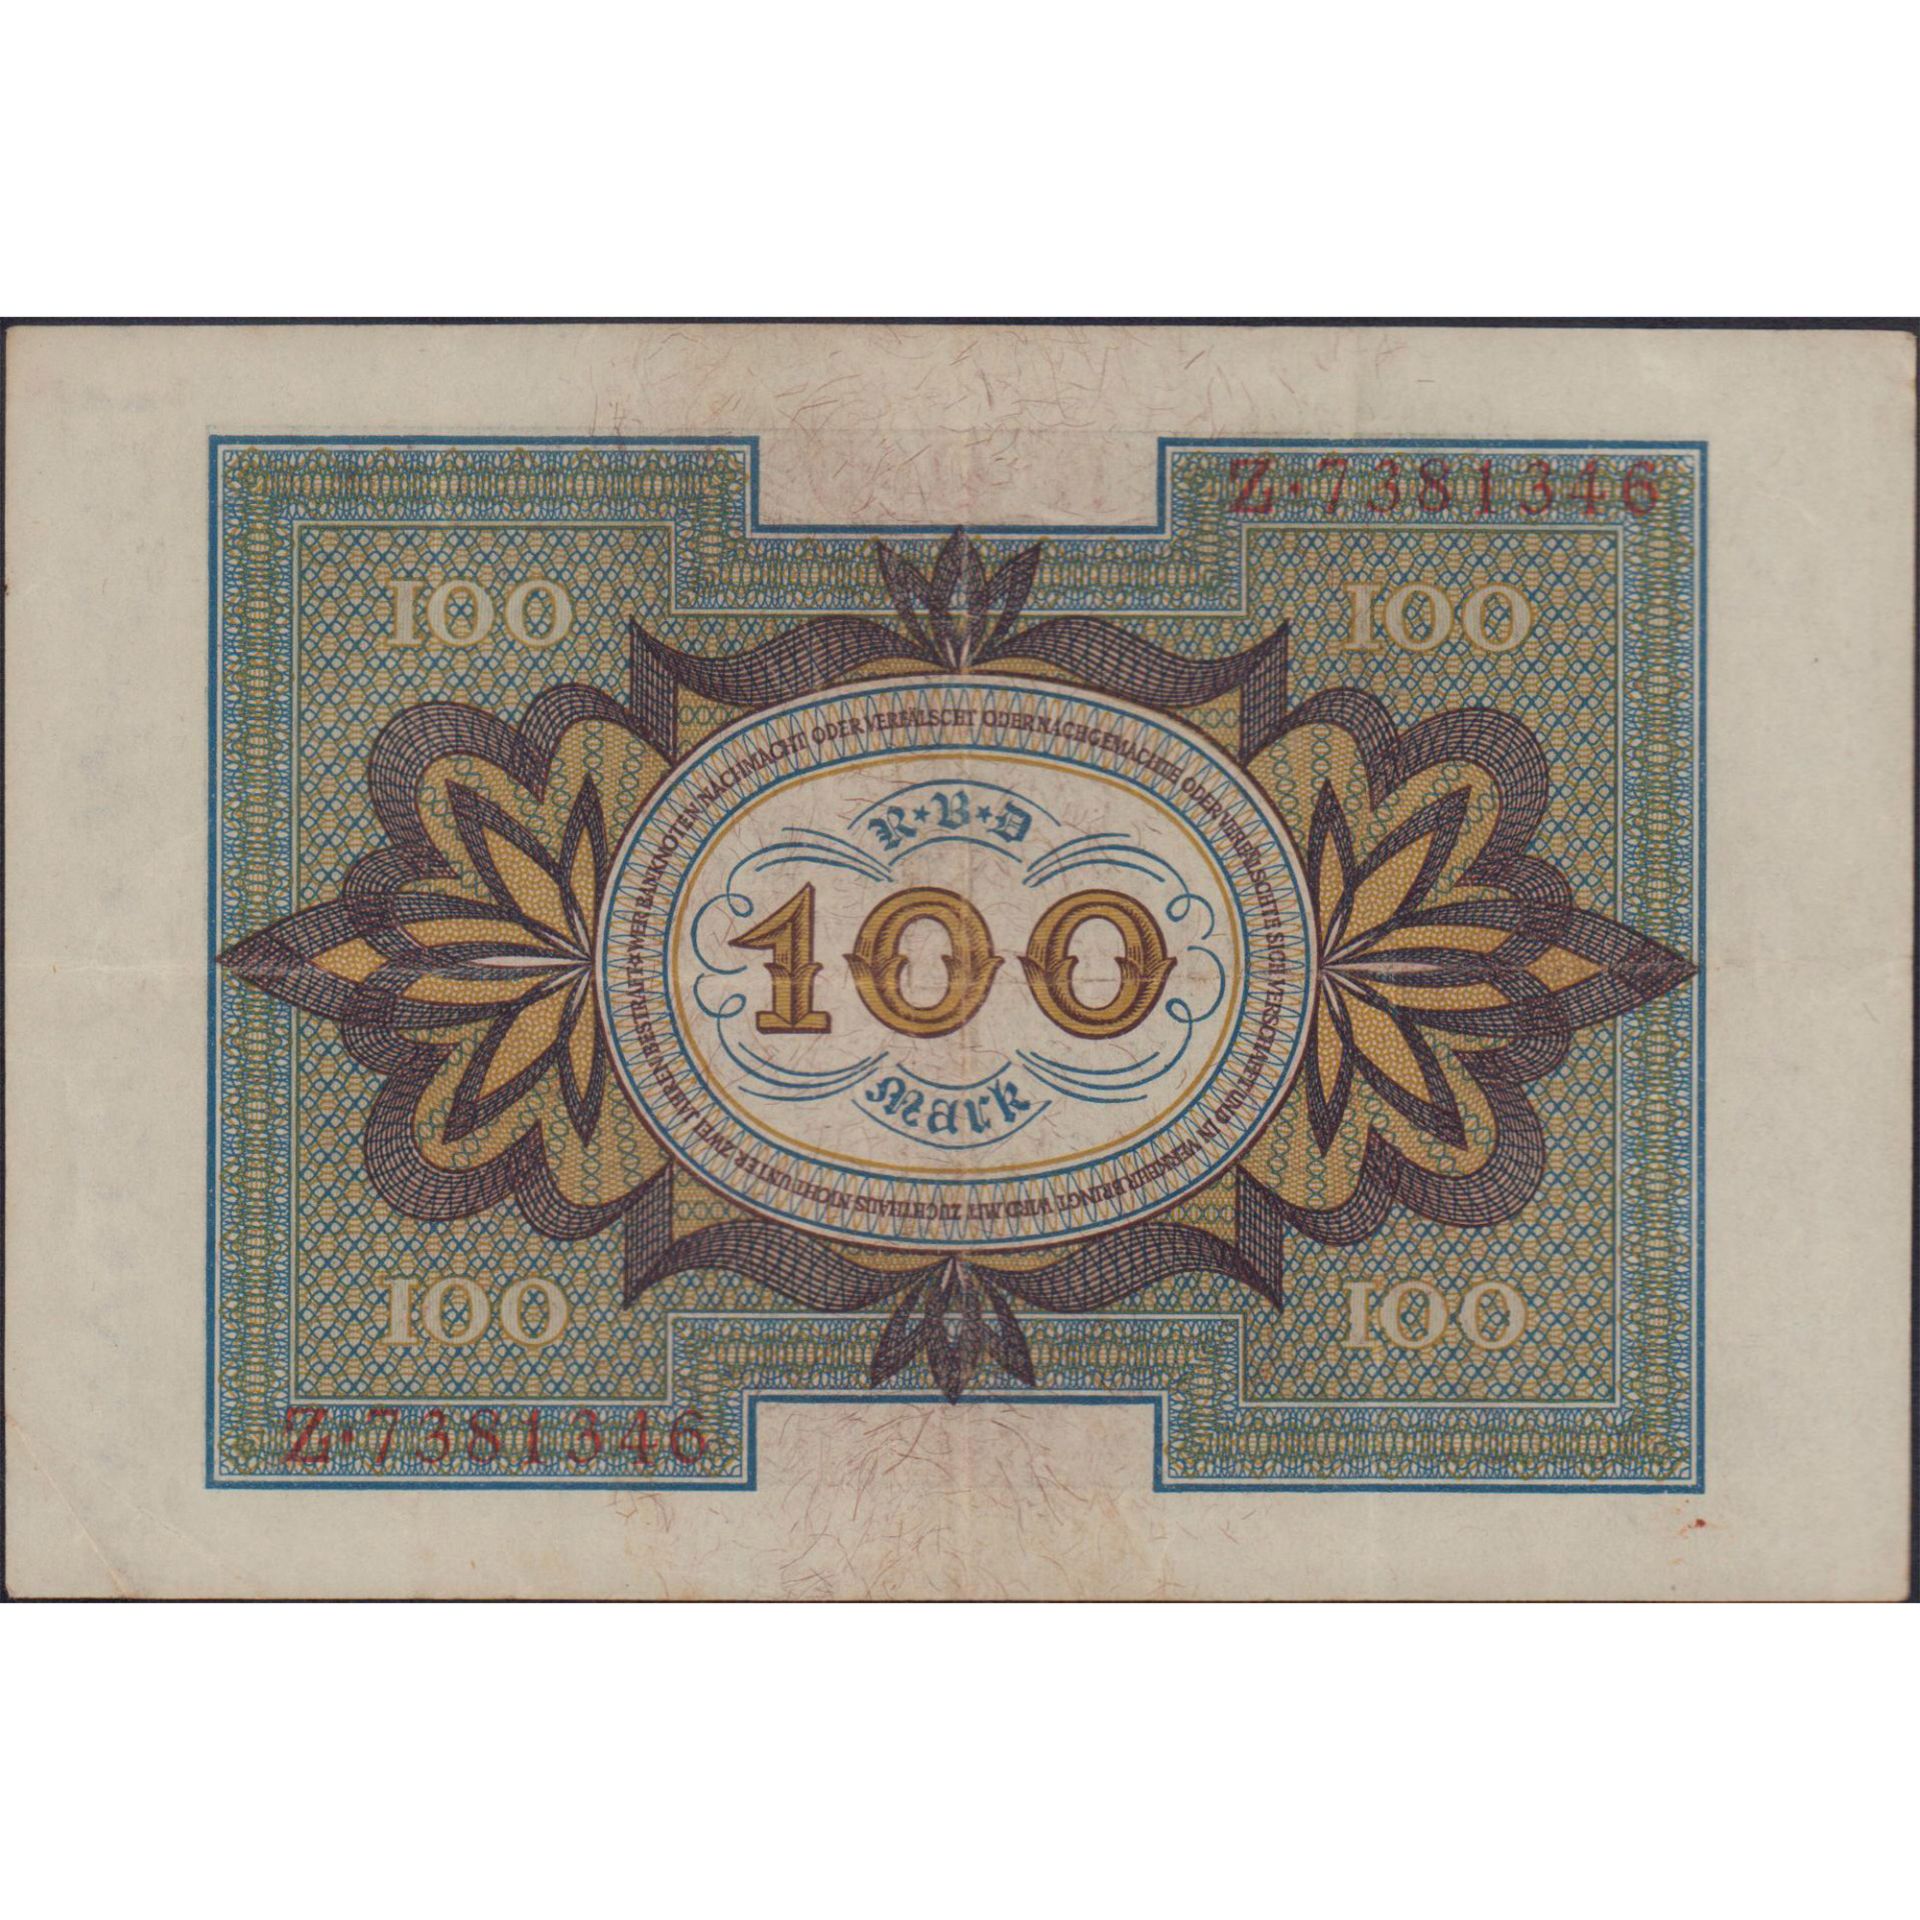 Antique 1920 German 100 Mark Banknote - Image 2 of 2